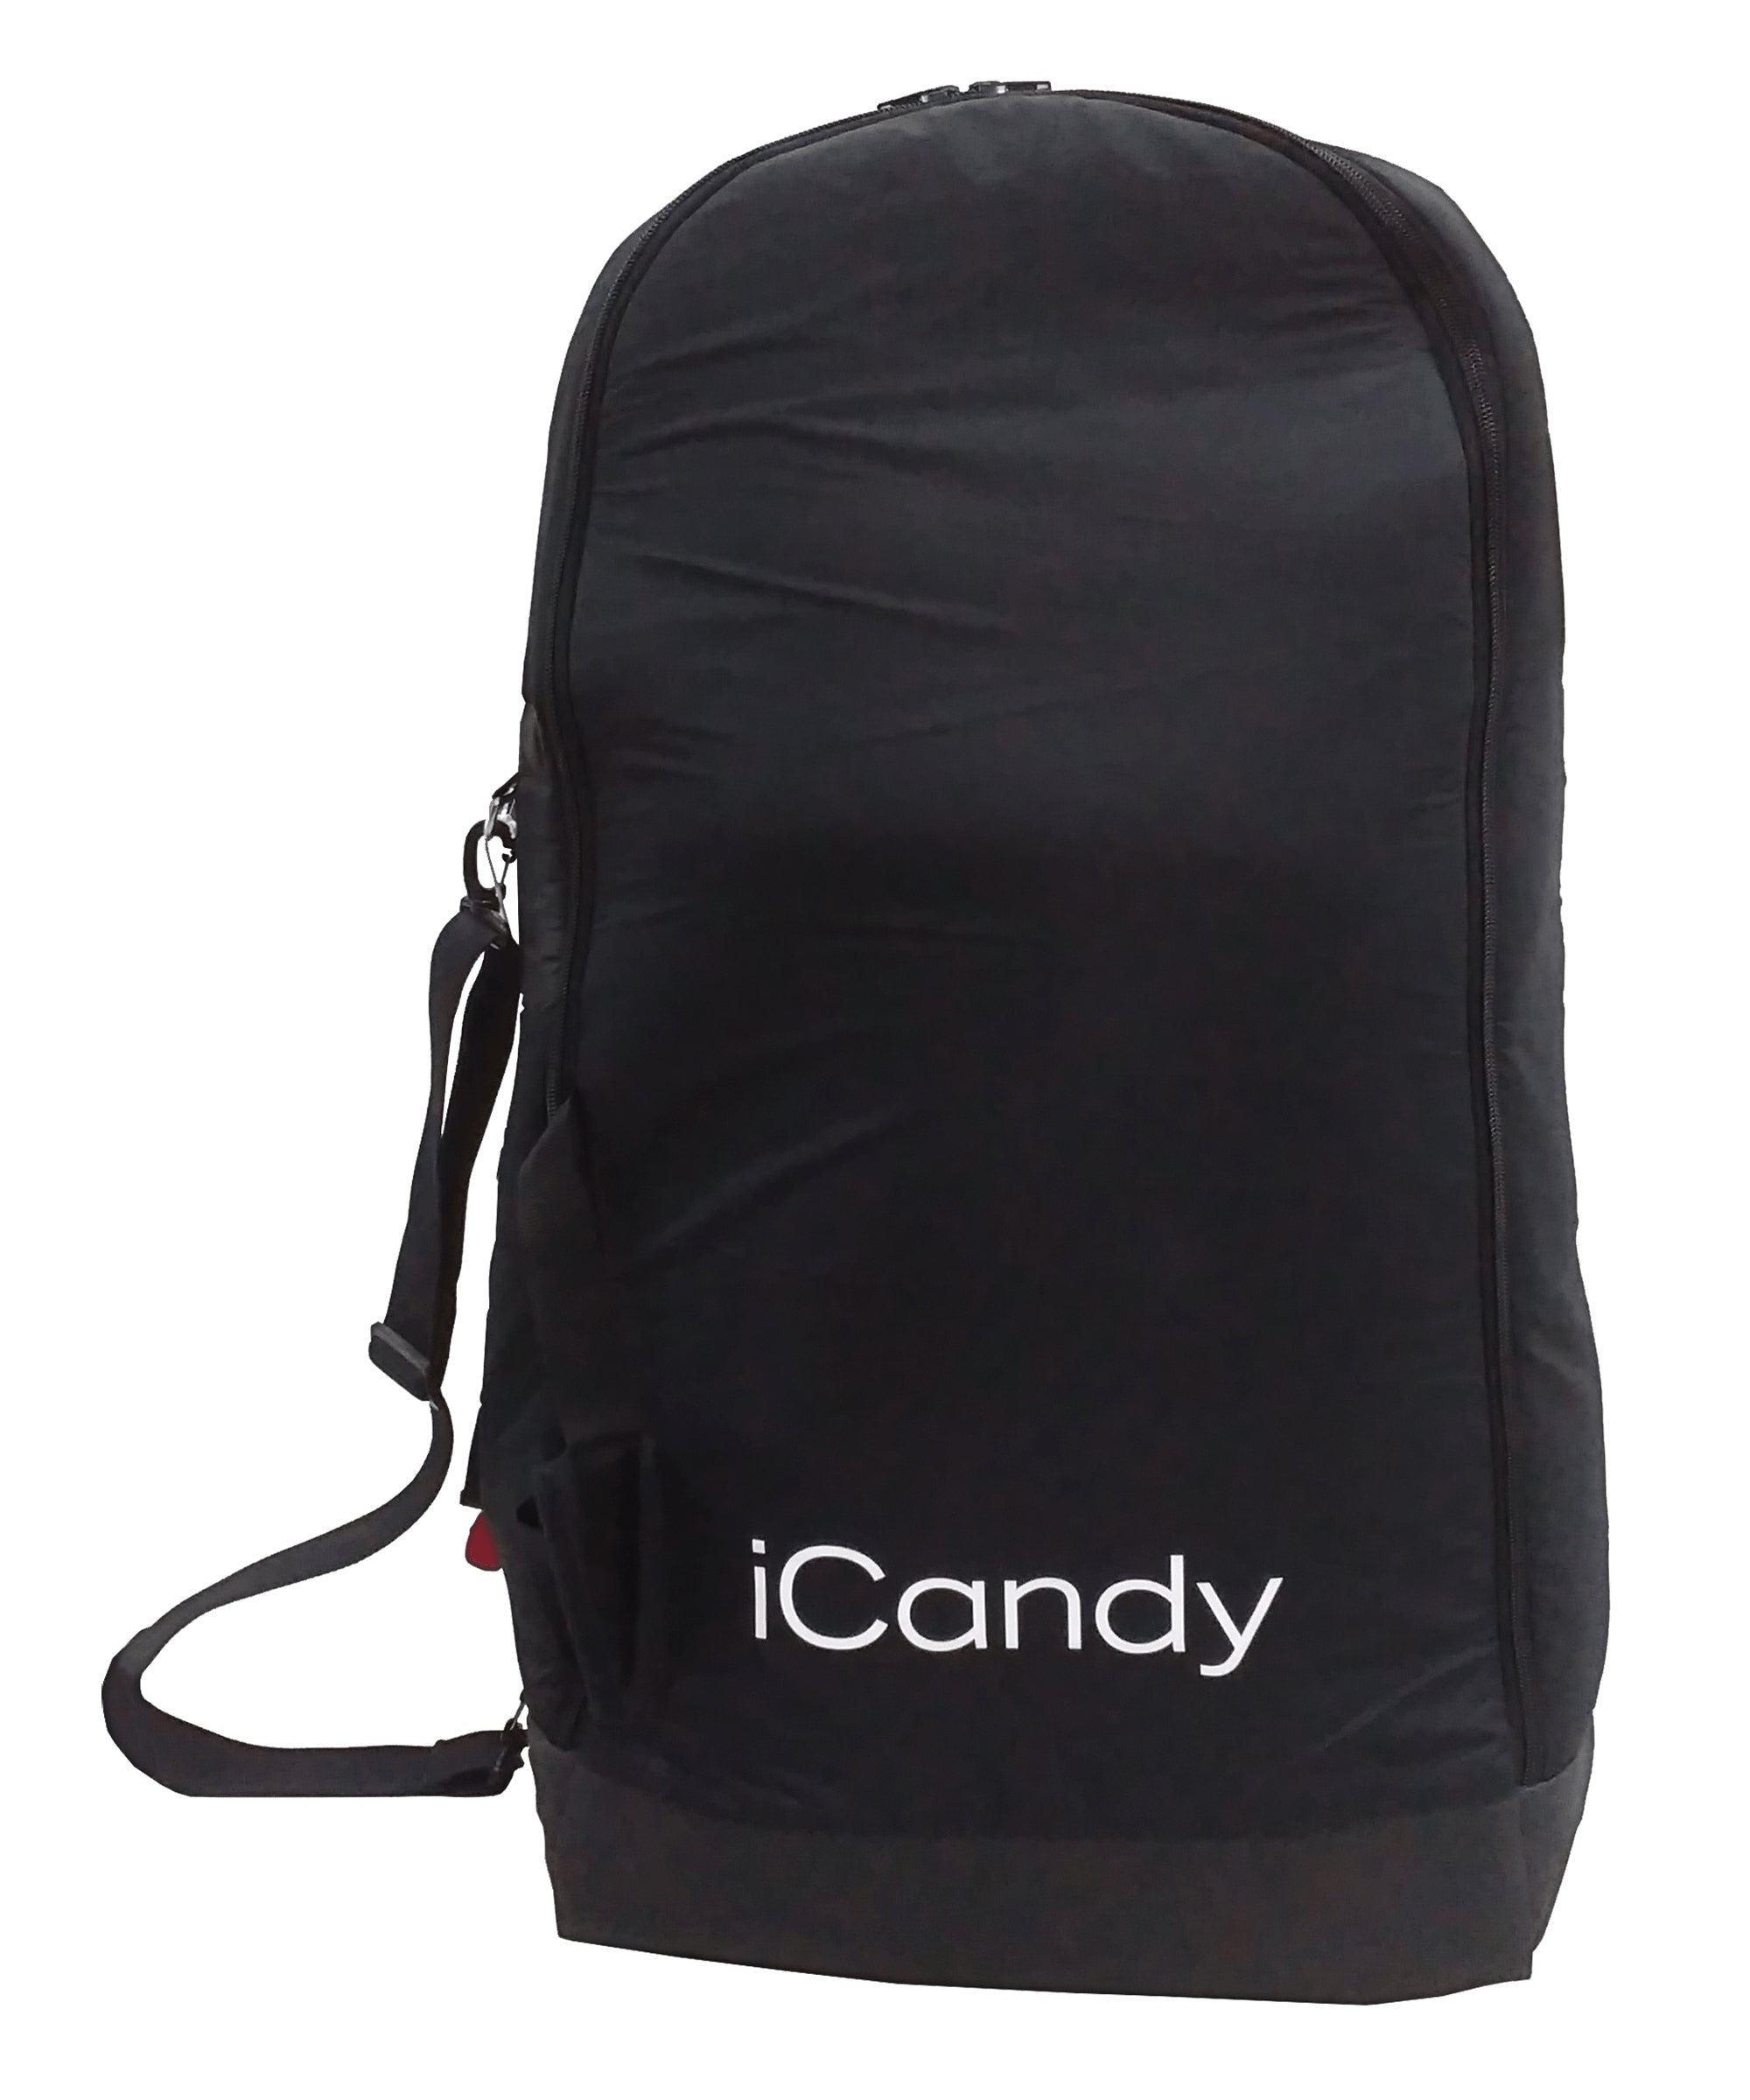 iCandy Raspberry Travel Bag